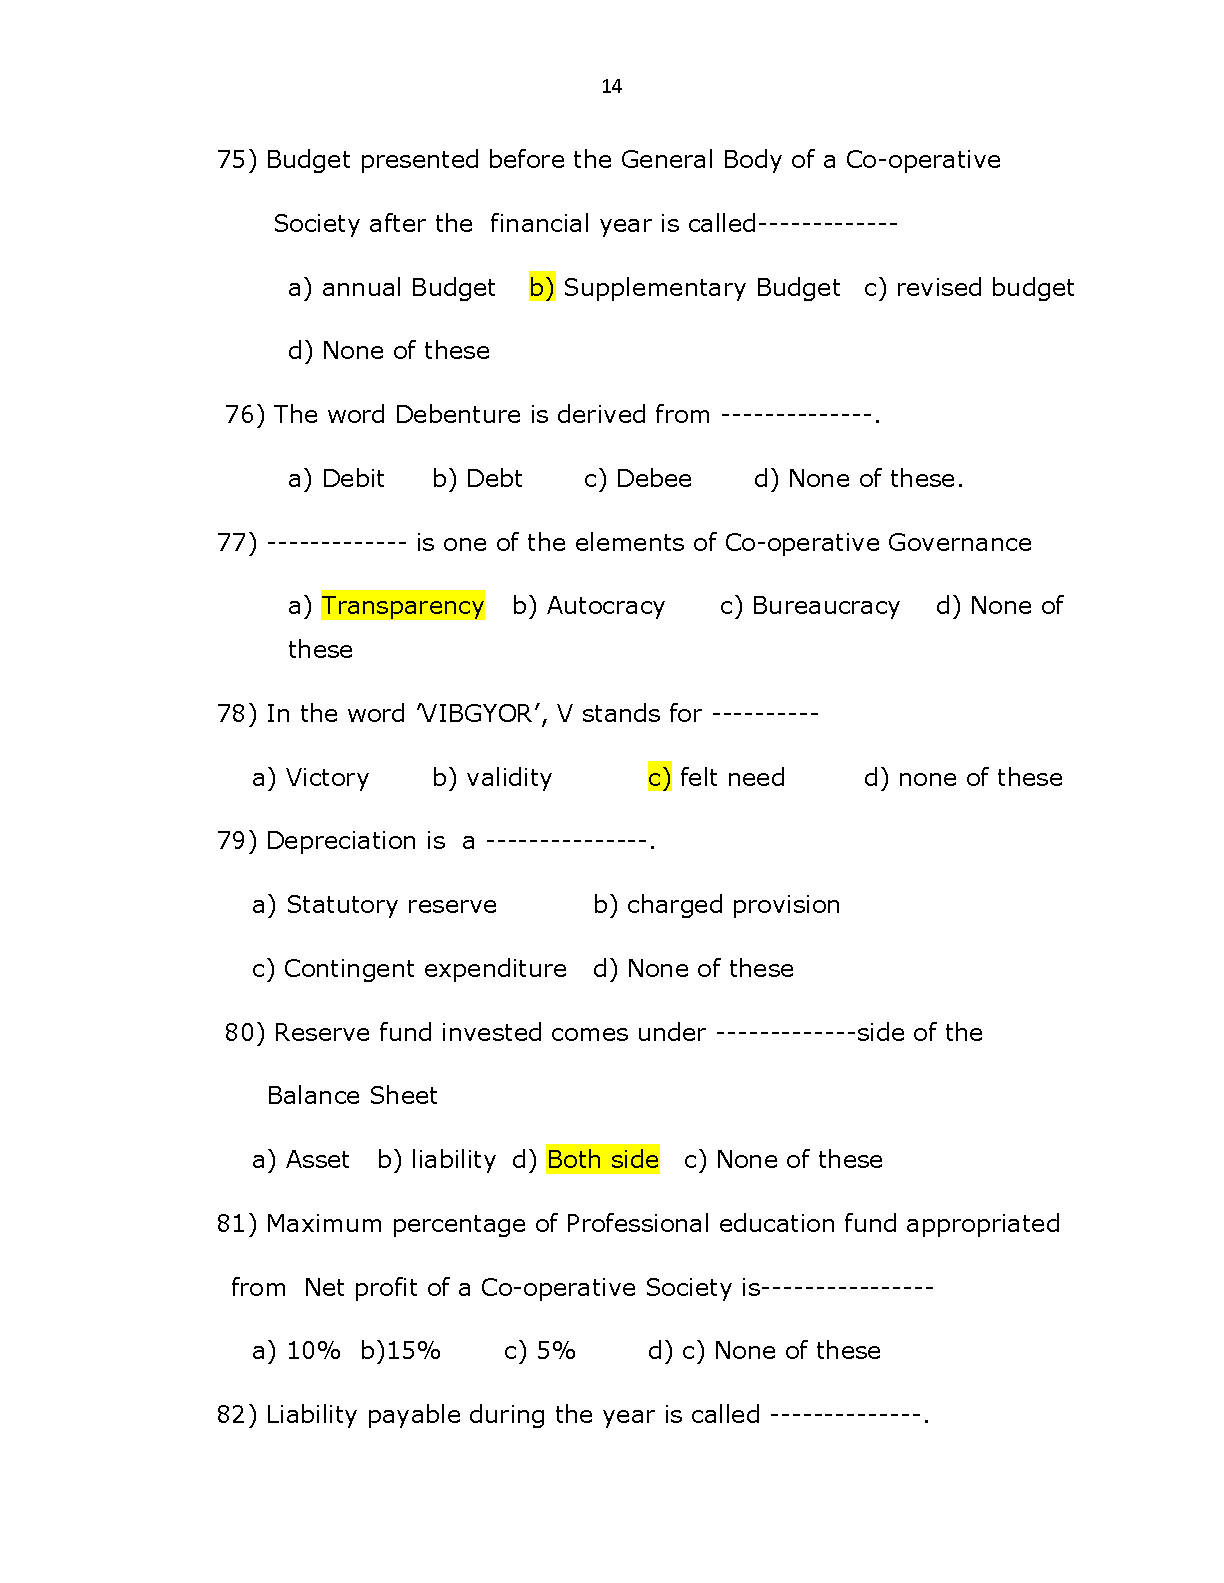 Kerala Co operative bank recruitment Sample Question Paper - Notification Image 14